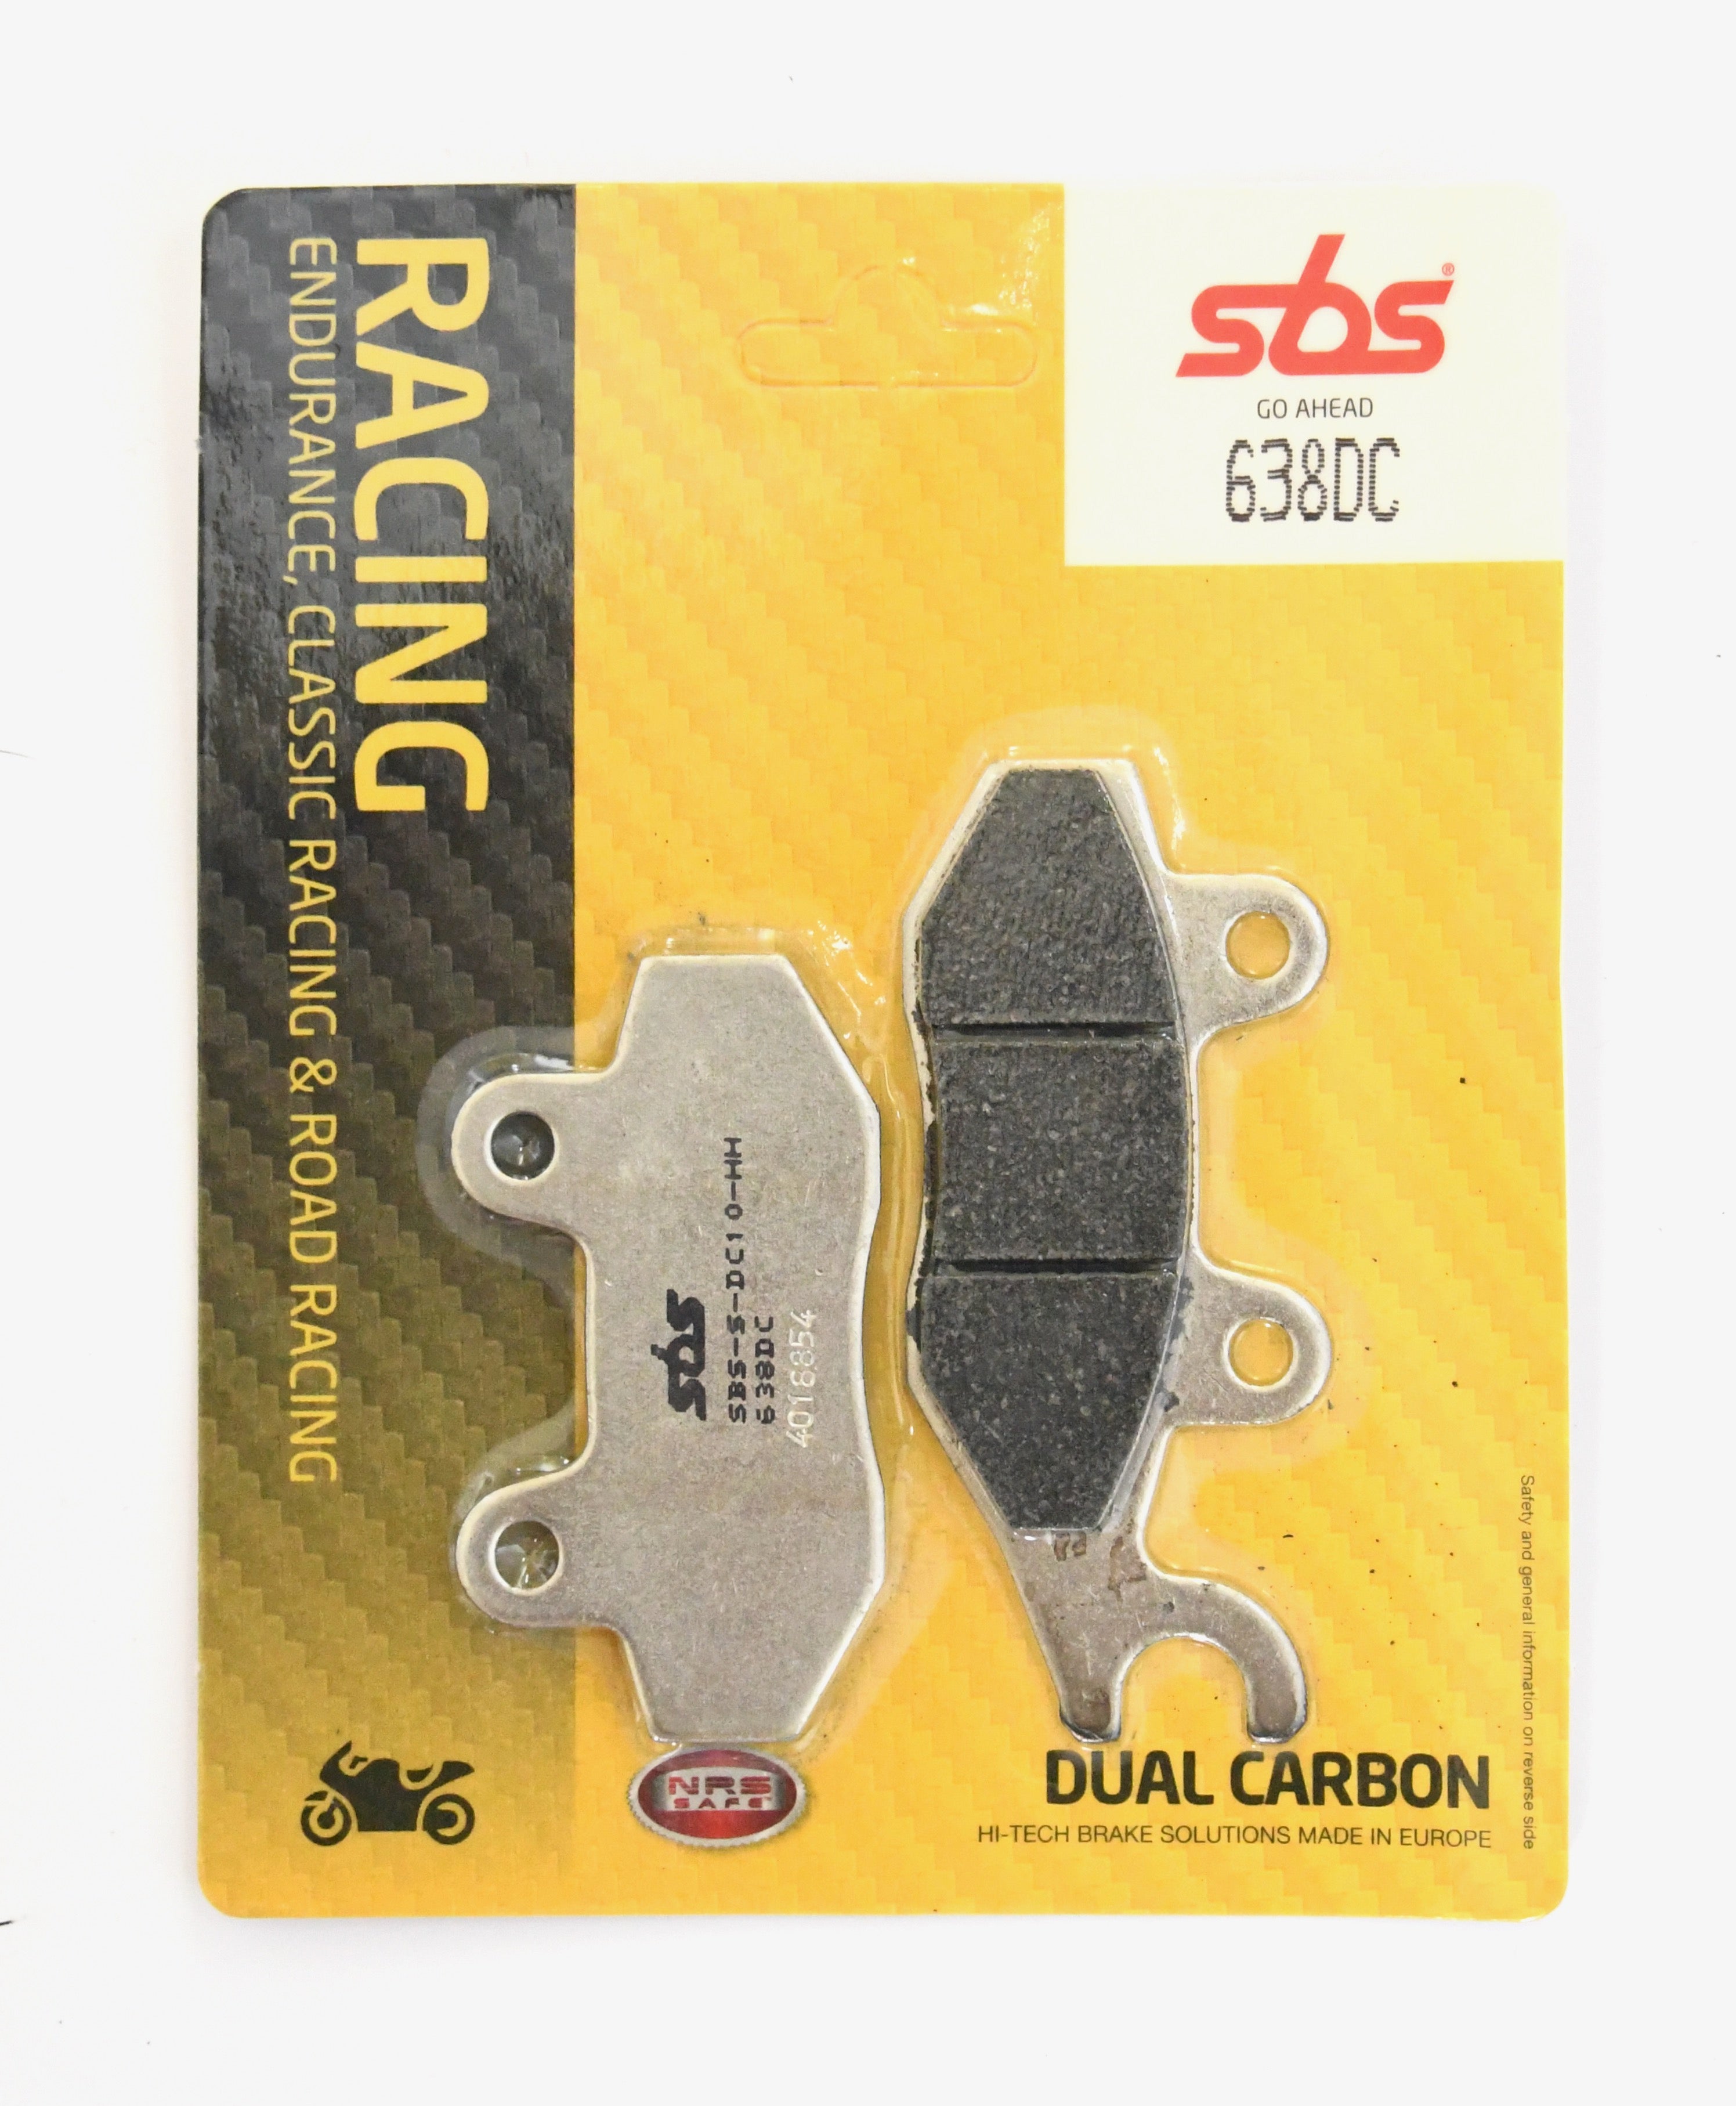 SBS 638DC Dual Carbon Racing Brake Pads